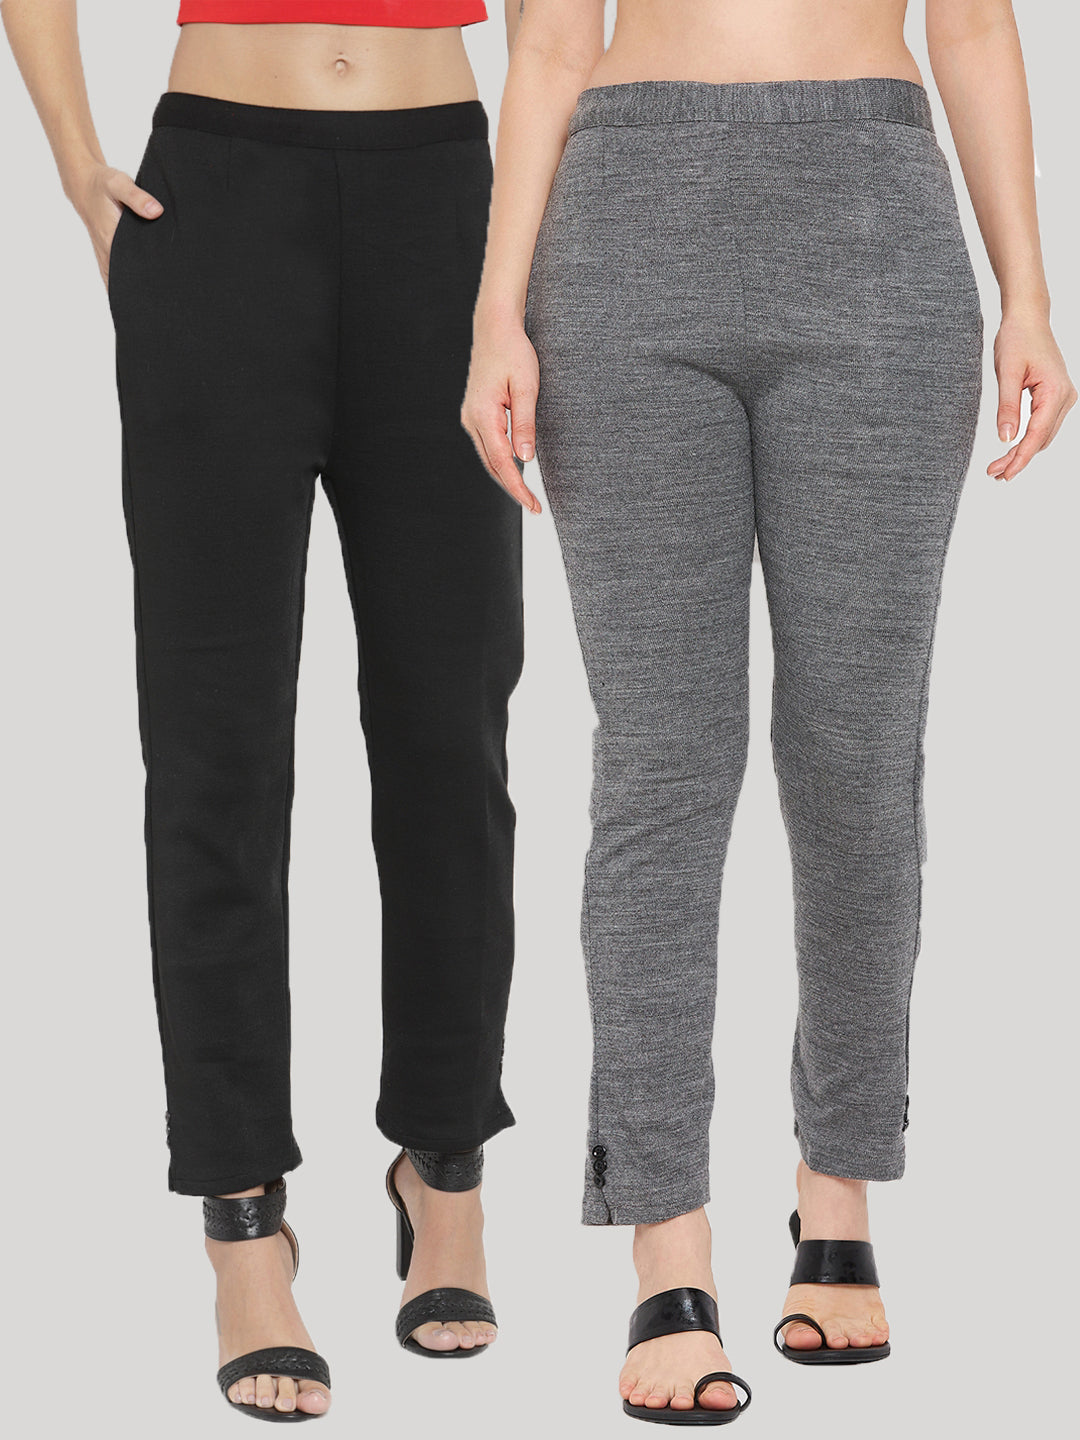 Clora Black & Grey Solid Woolen Trouser (Pack of 2)